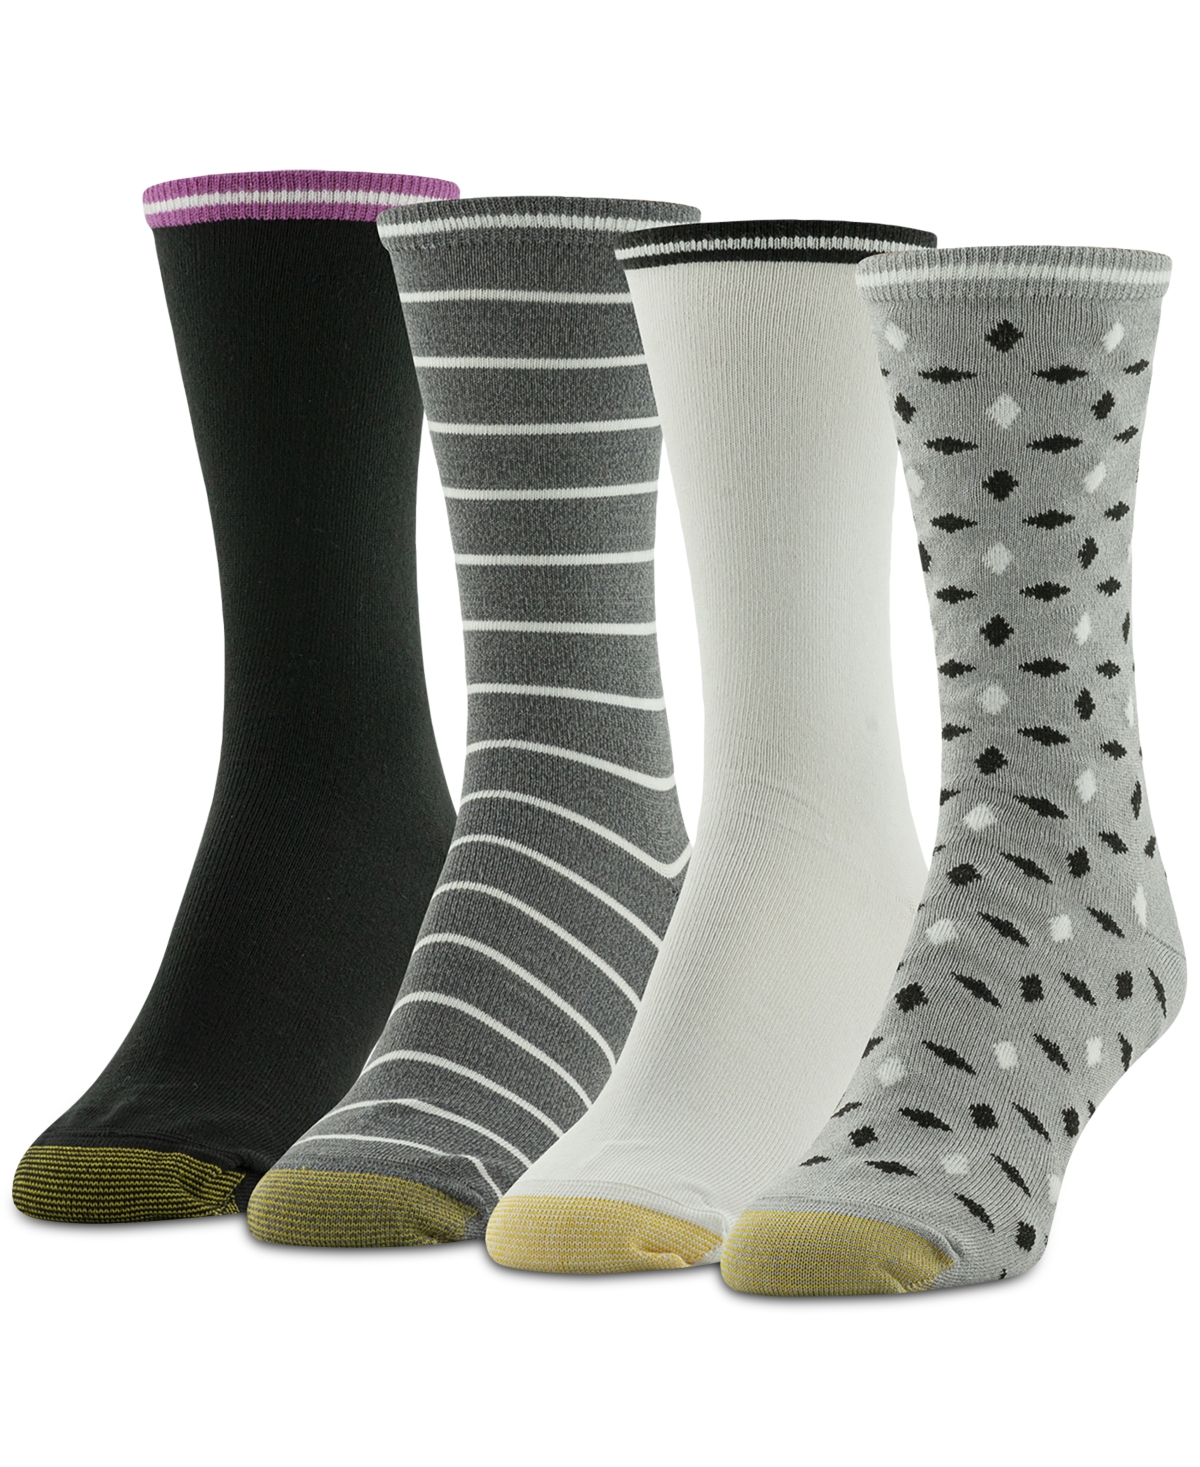 Gold Toe Women's 10-Pack Casual Cushion Heel And Toe Ankle Socks - Macy's